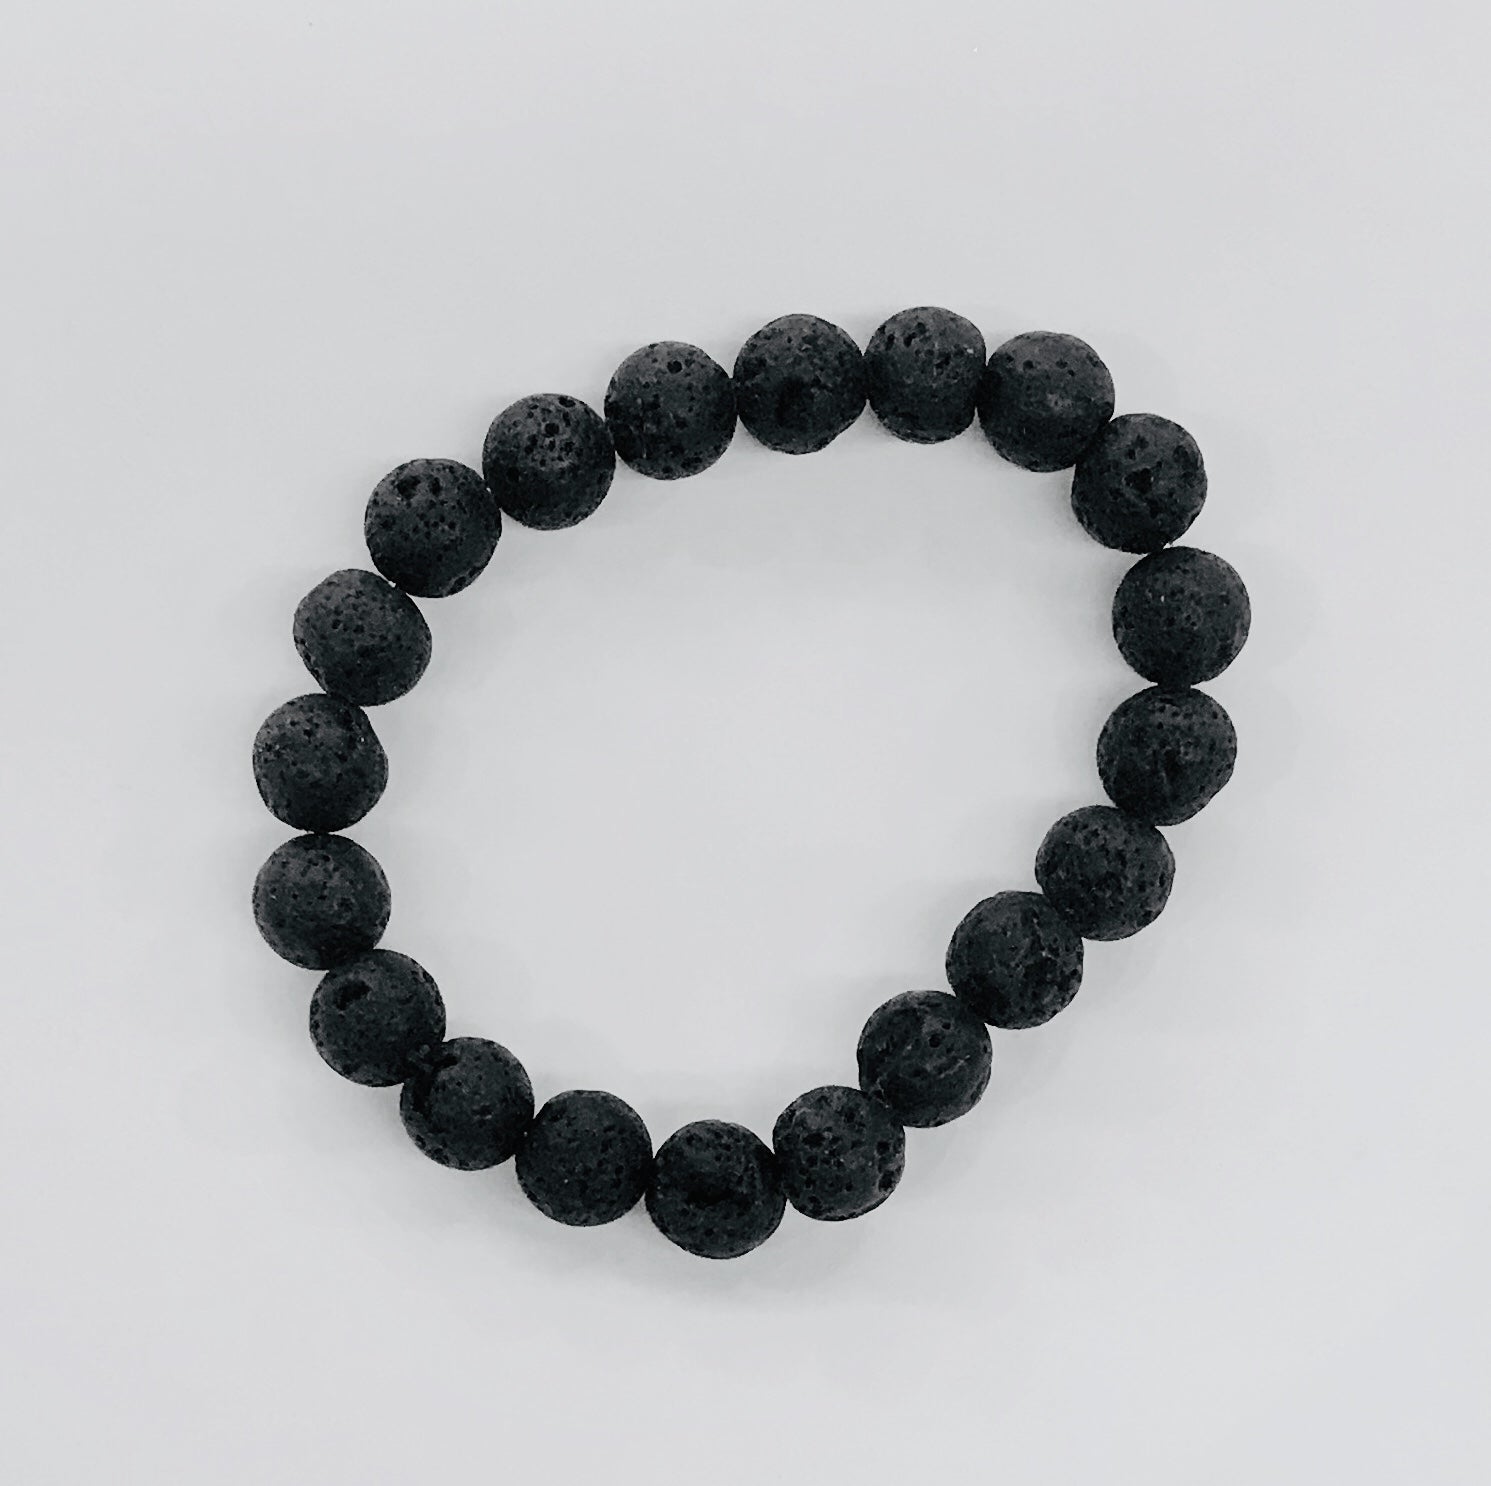 Lava bead bracelet - Michael's Gems & Glass